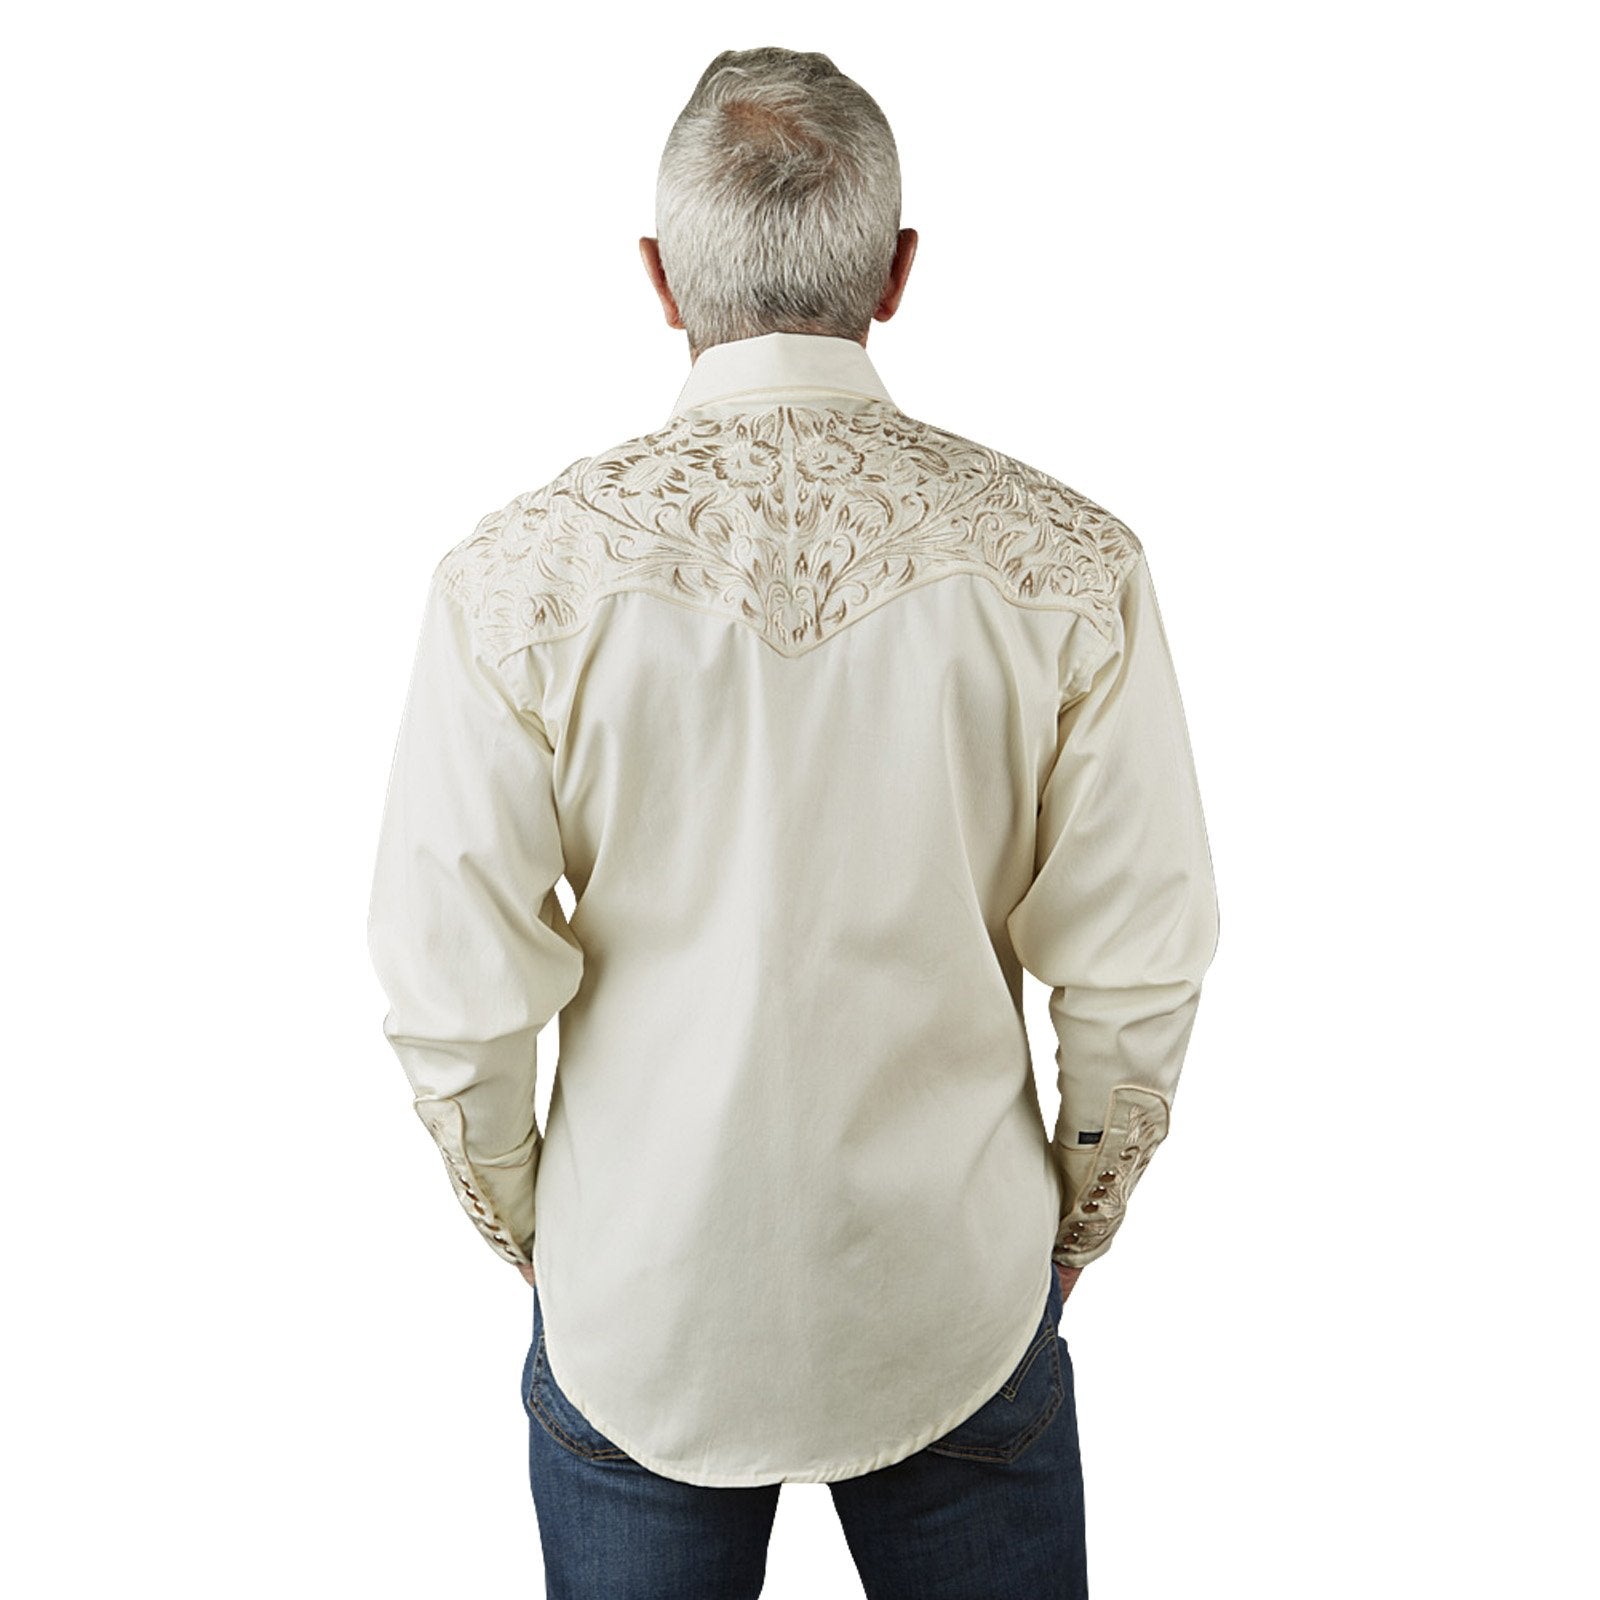 Vintage Inspired Western Shirt Men's Rockmount Ranch Wear Tooling Tan Back